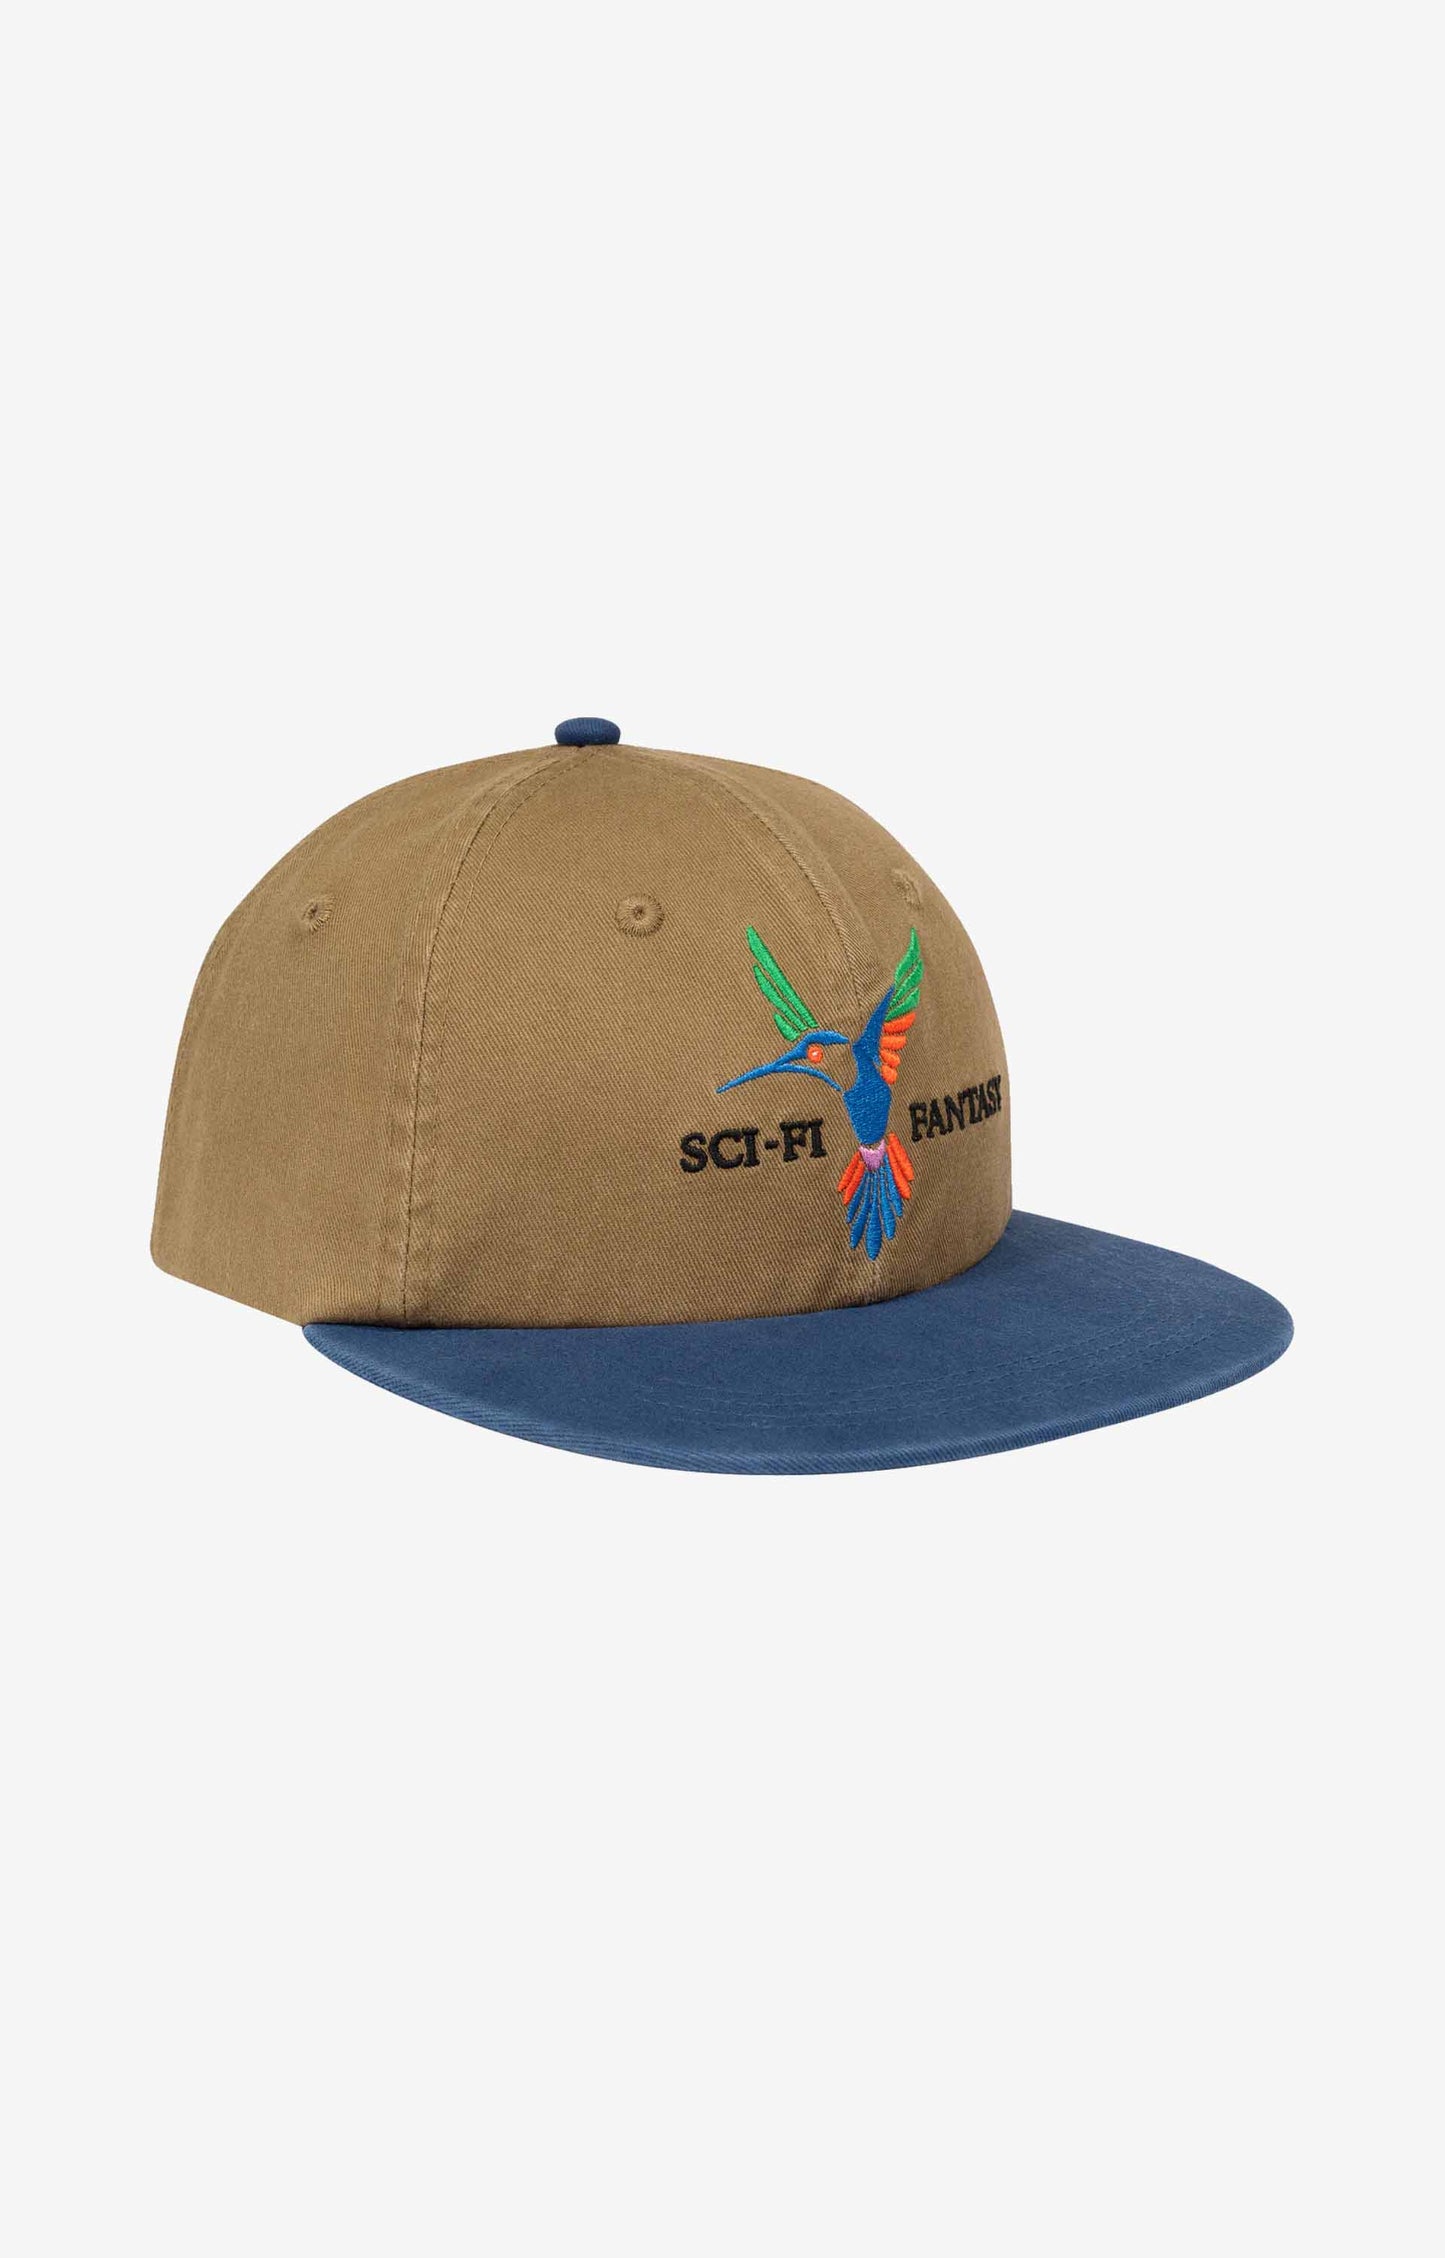 Sci-Fi Fantasy Humming Bird Hat Headwear, Olive/Navy